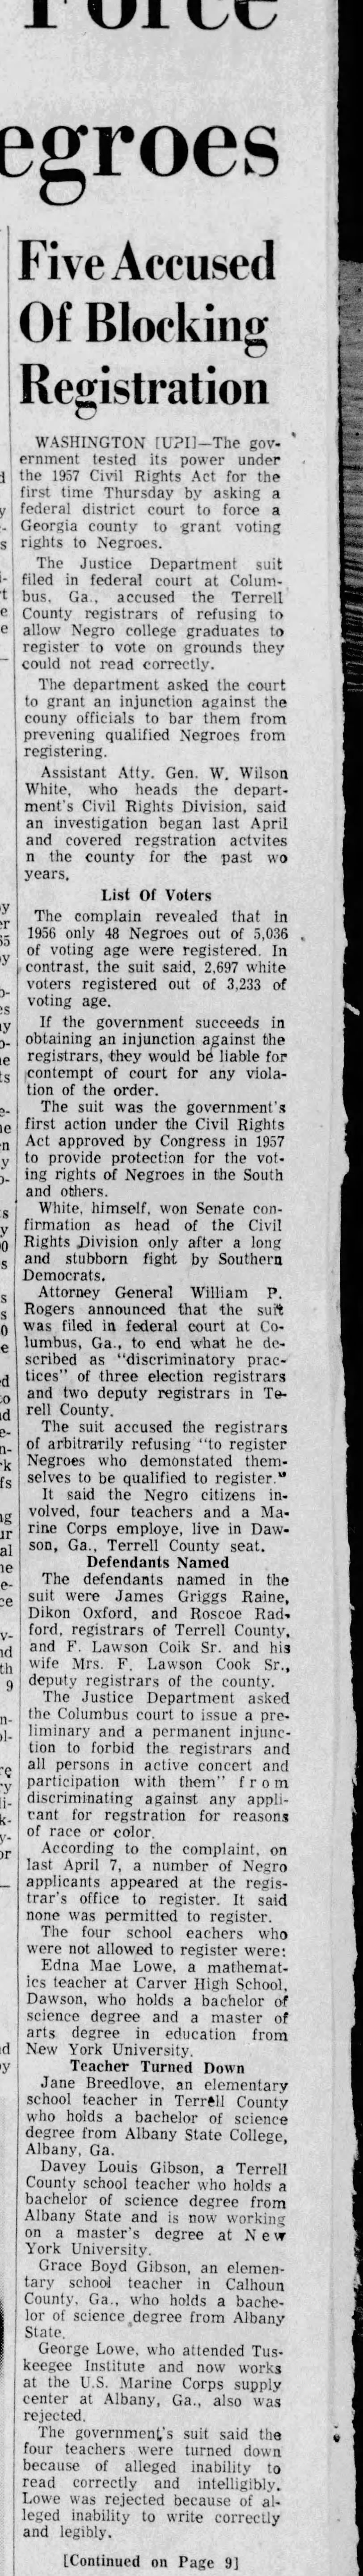 Terrell County Georgia  Civil Rights Act vote register